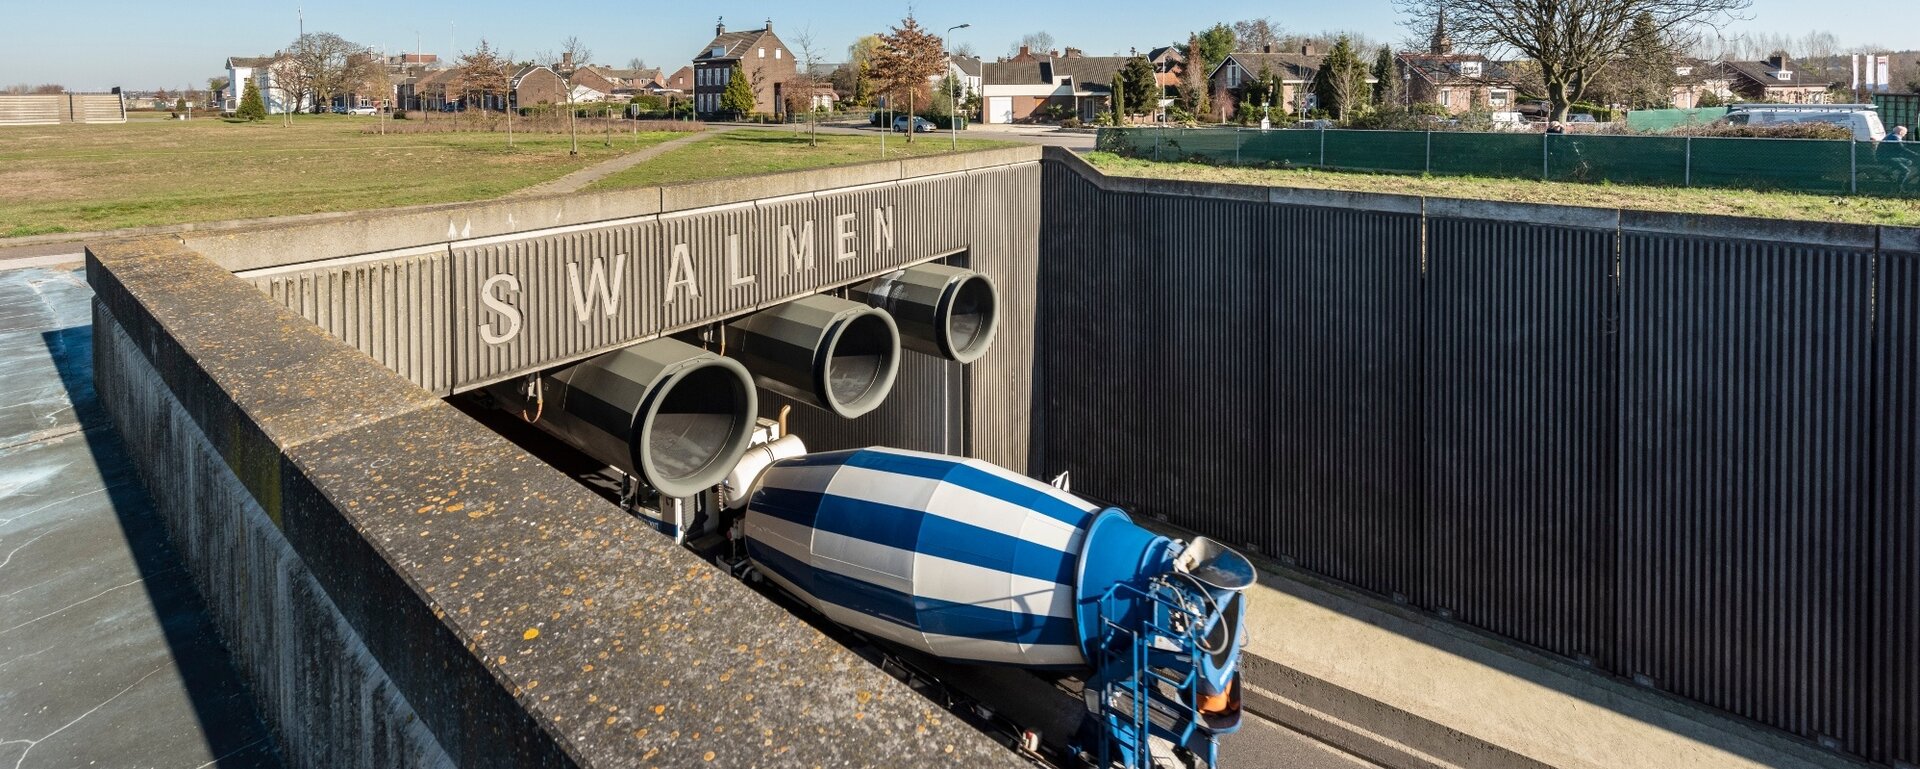 The Swalmen tunnel near Roermond (Photo: Tineke Dijkstra | Rijkswaterstaat)